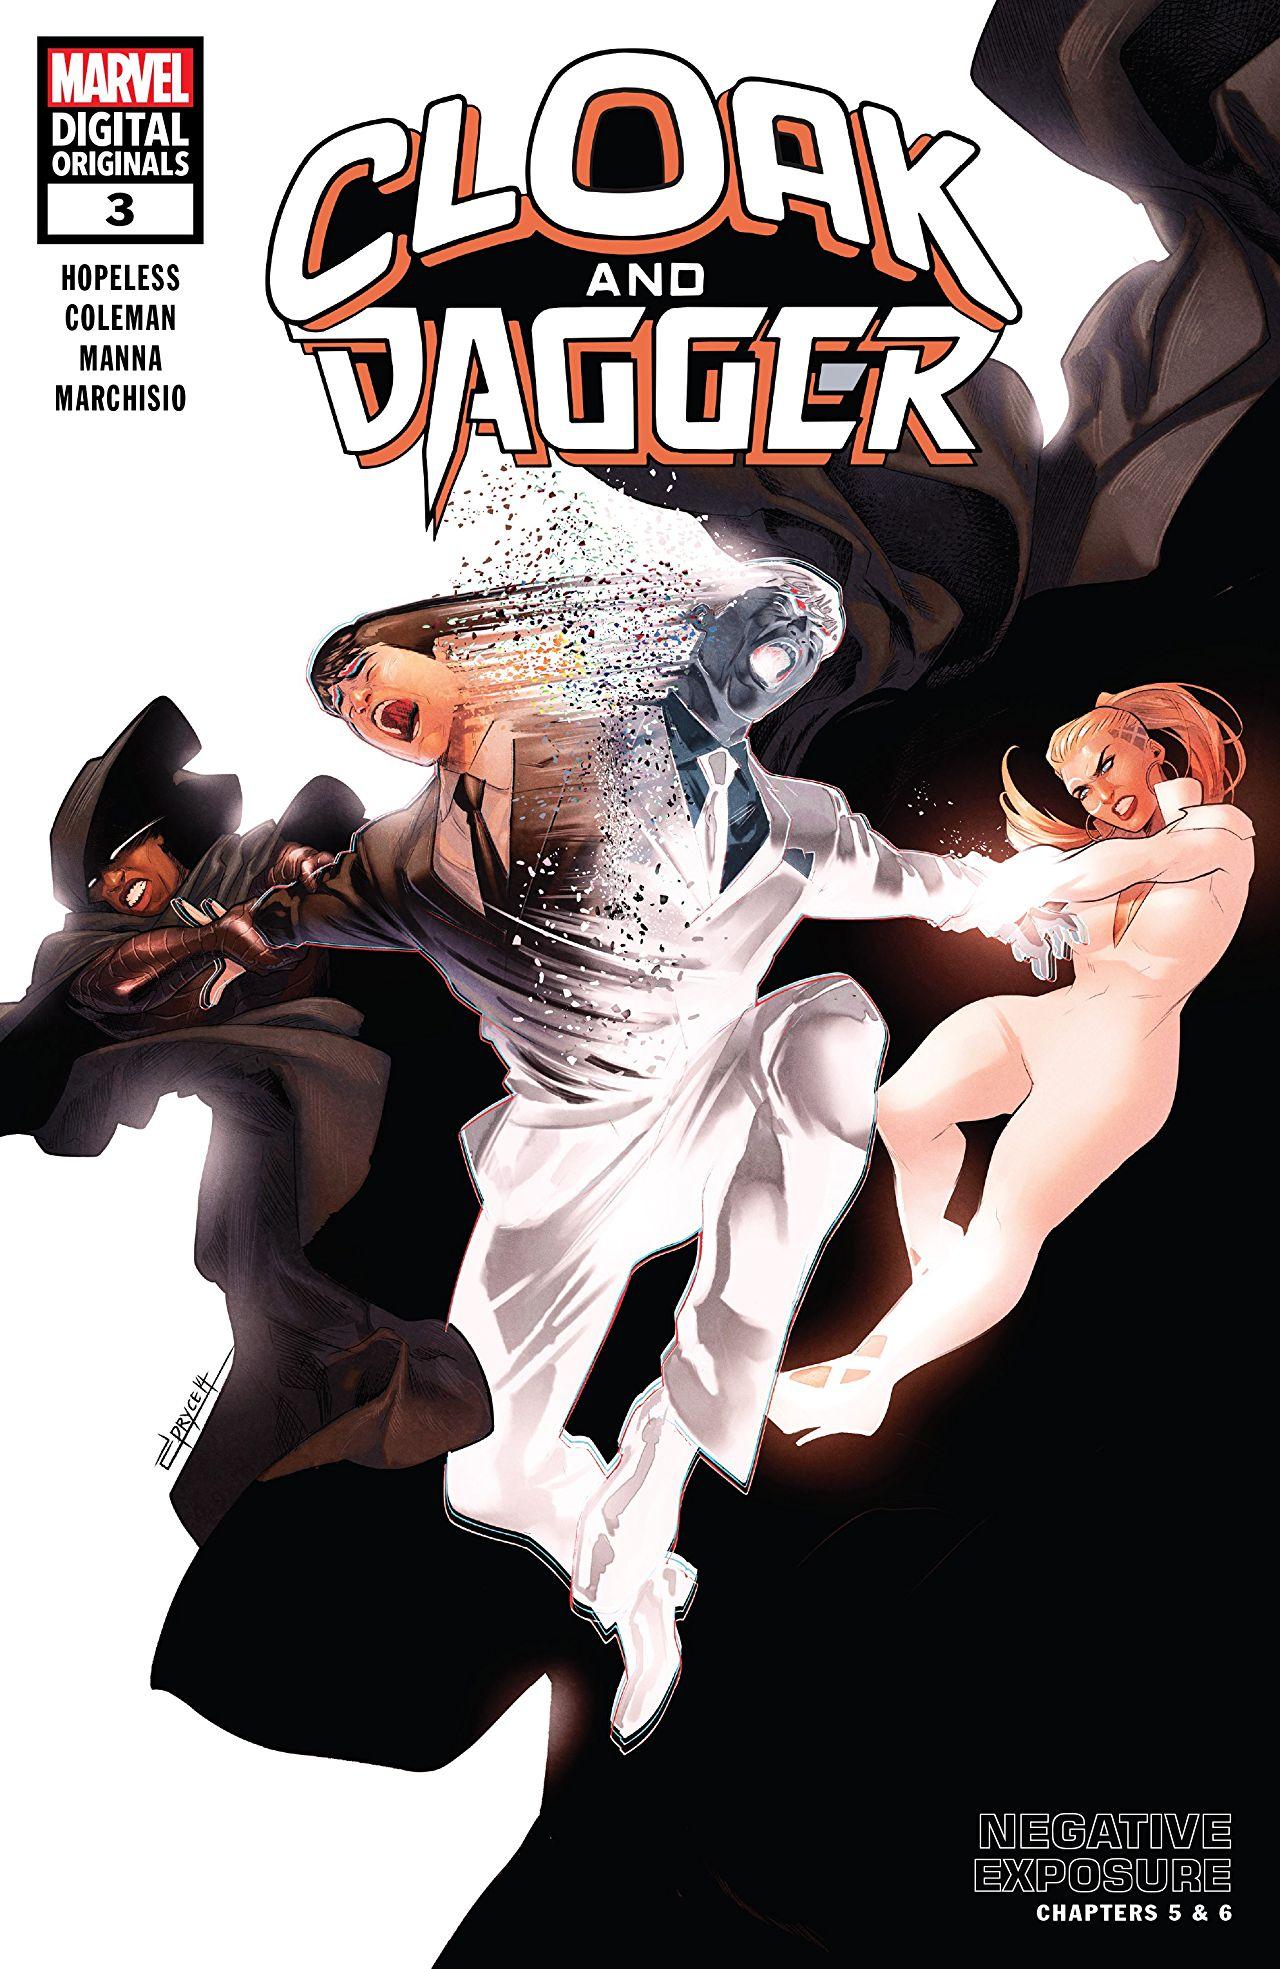 Cloak and Dagger: Negative Exposure - Marvel Digital Original Vol. 1 #3